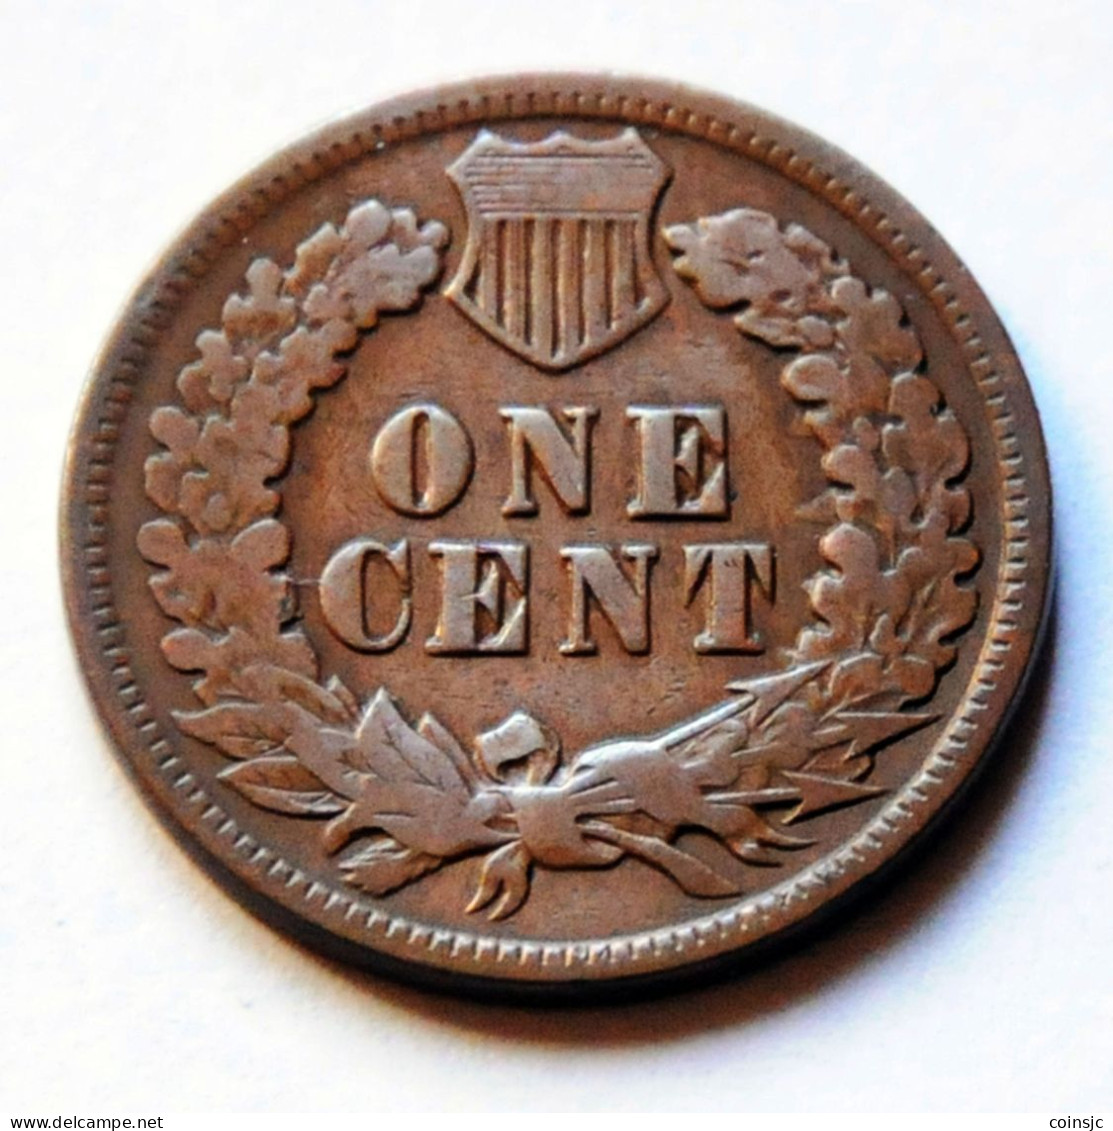 US - 1 CENT - 1905 - Half Cent